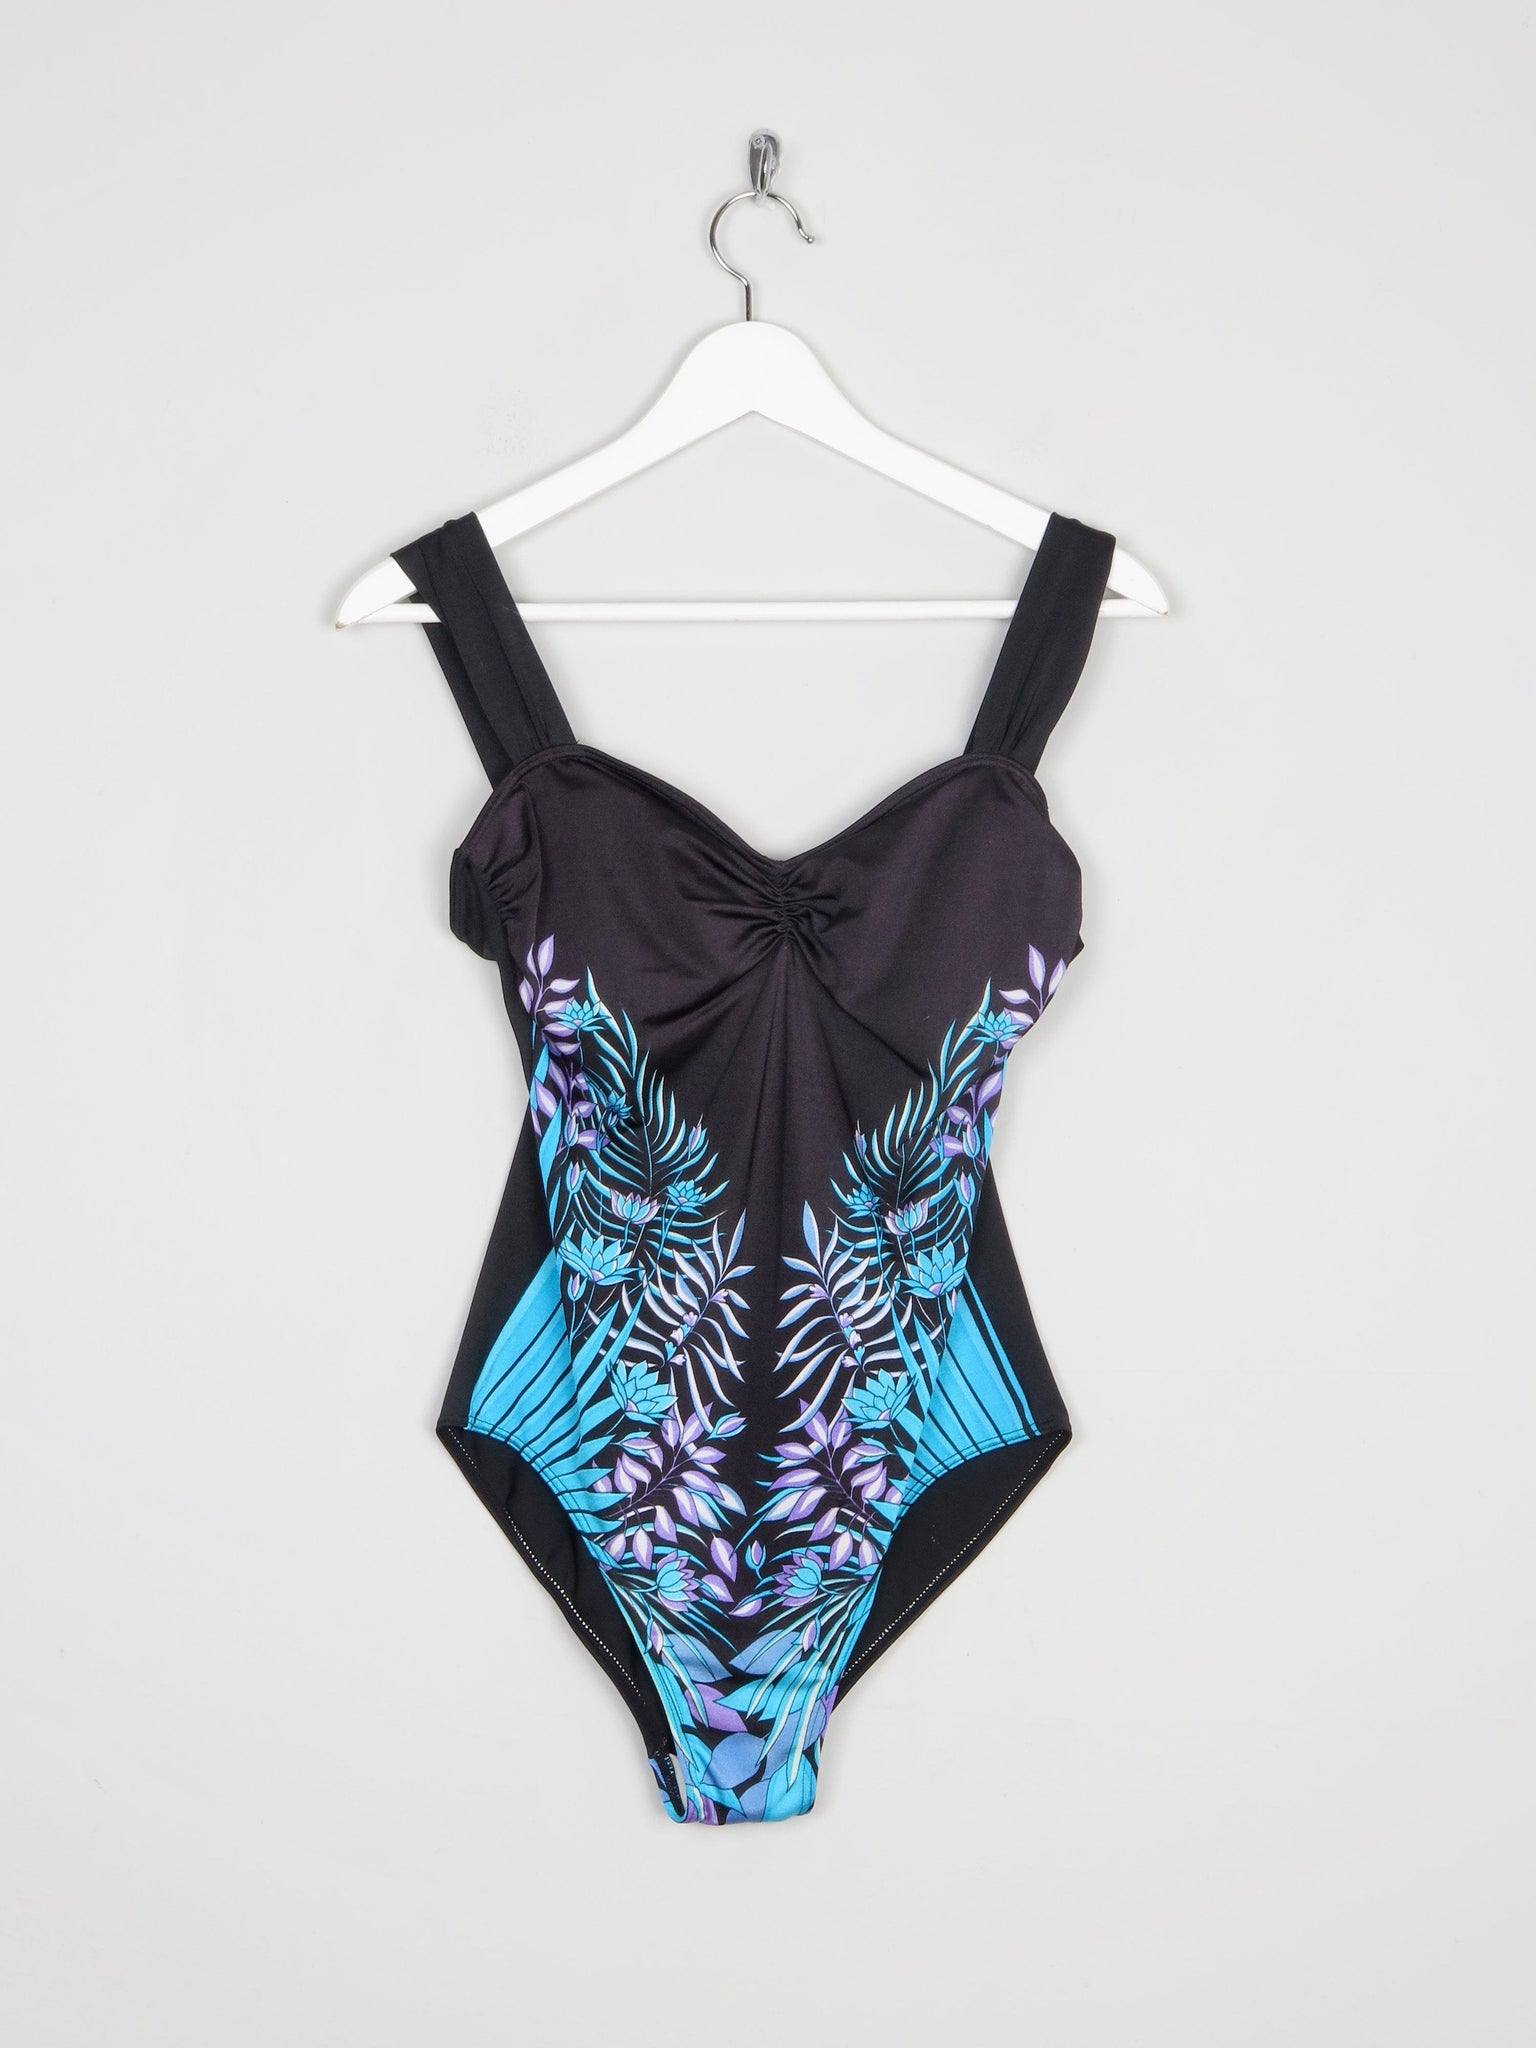 Vintage Blue & Black Printed Swimsuit S - The Harlequin